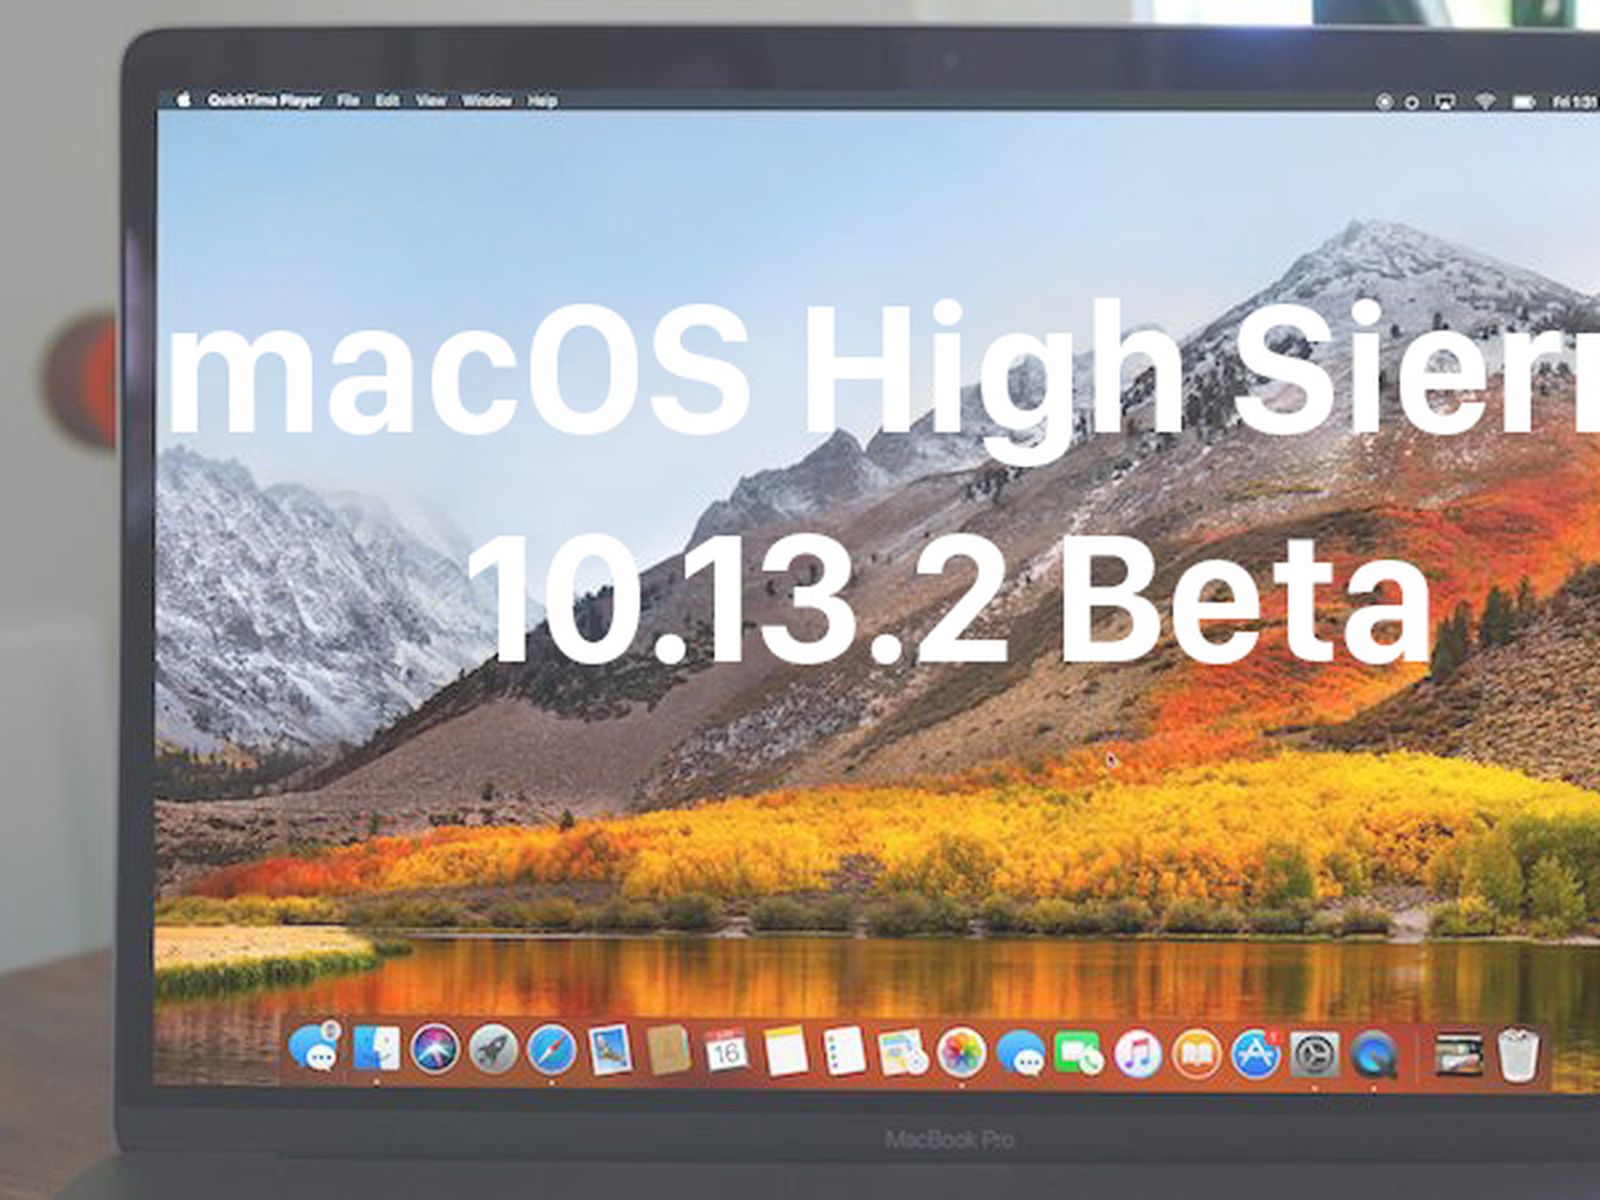 usb ethernet for mac high sierra driver 0s 10.13